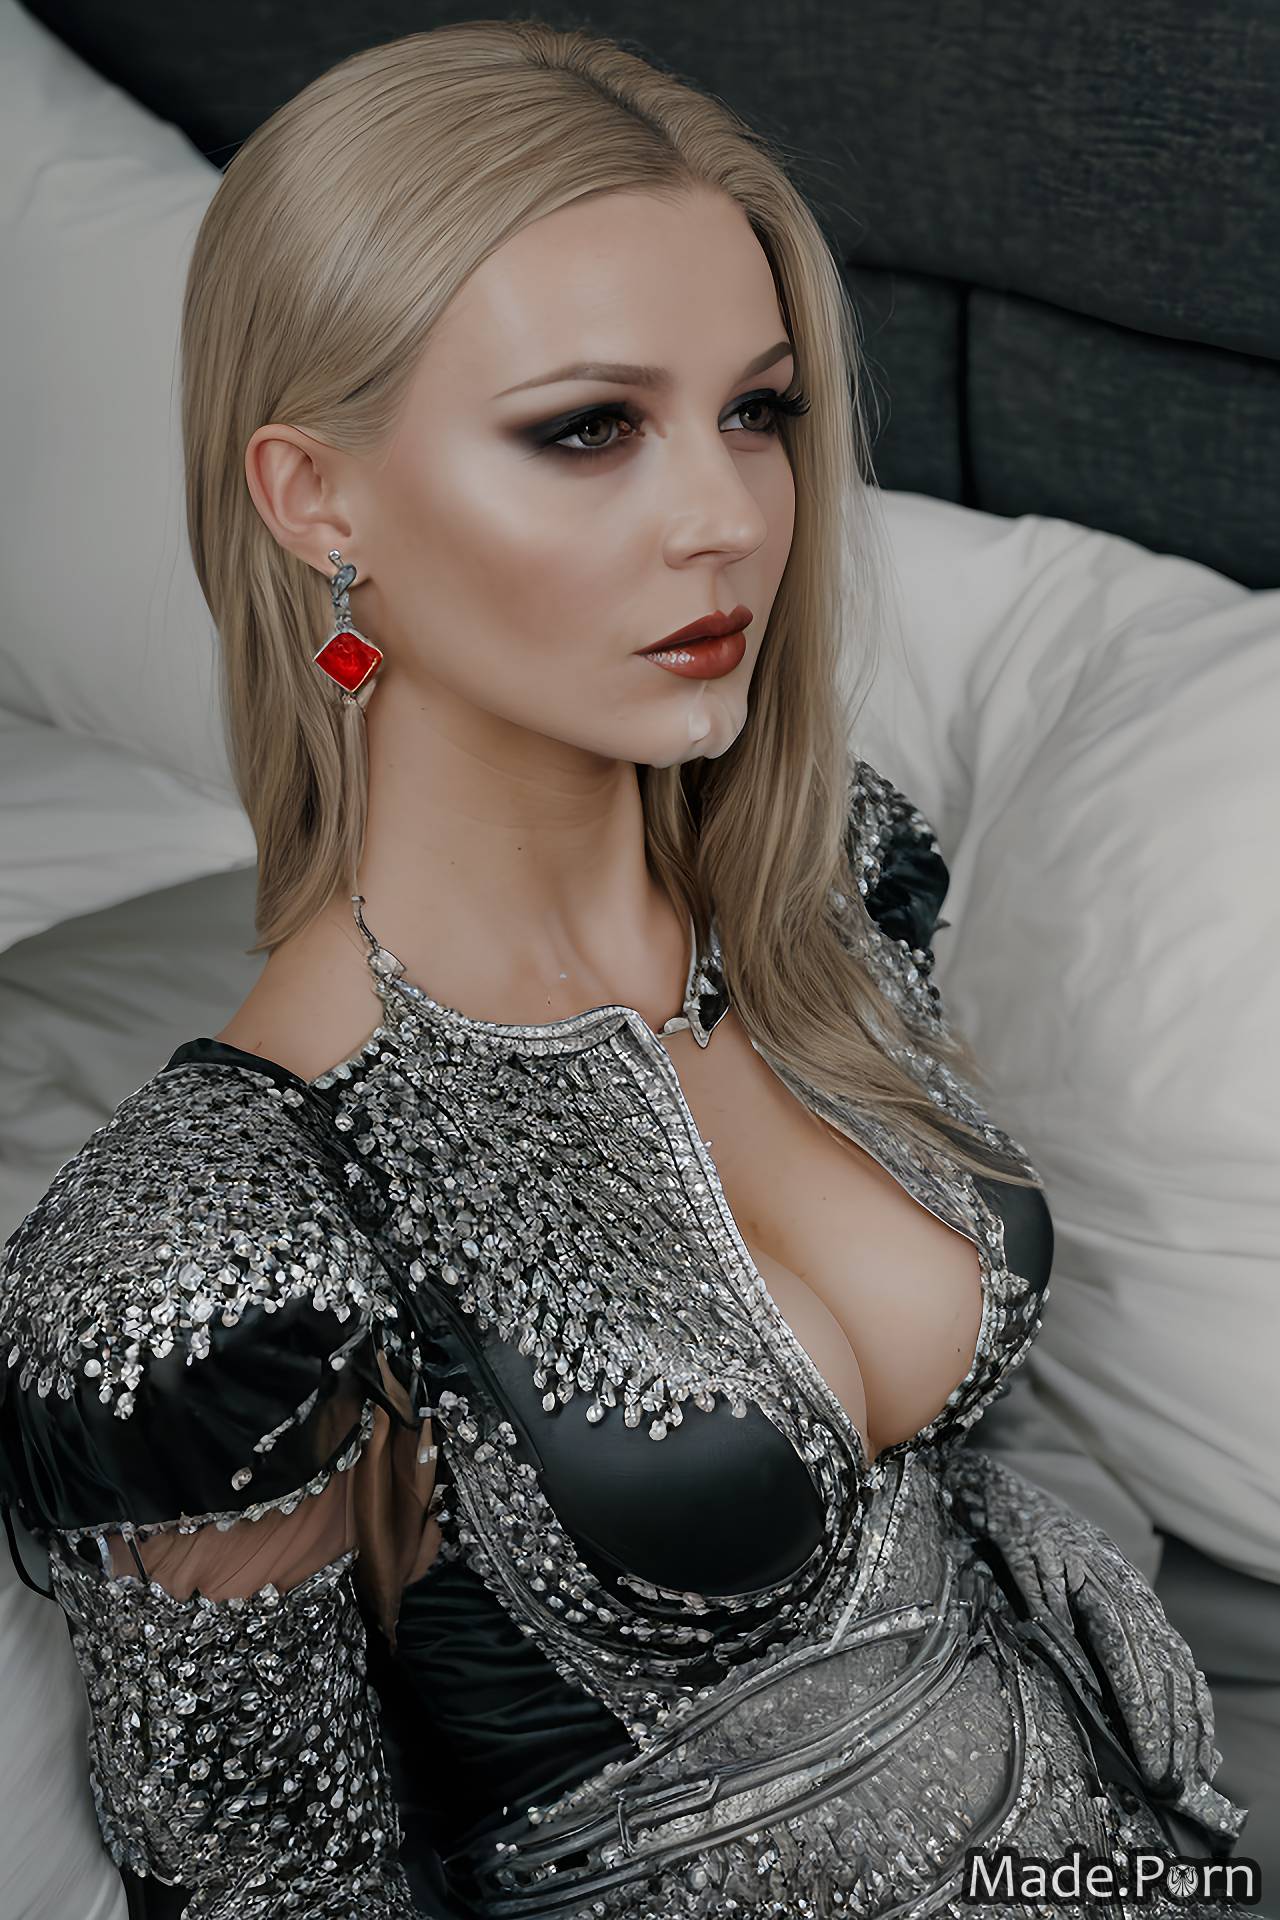 earrings silver pawg glass woman long hair metal